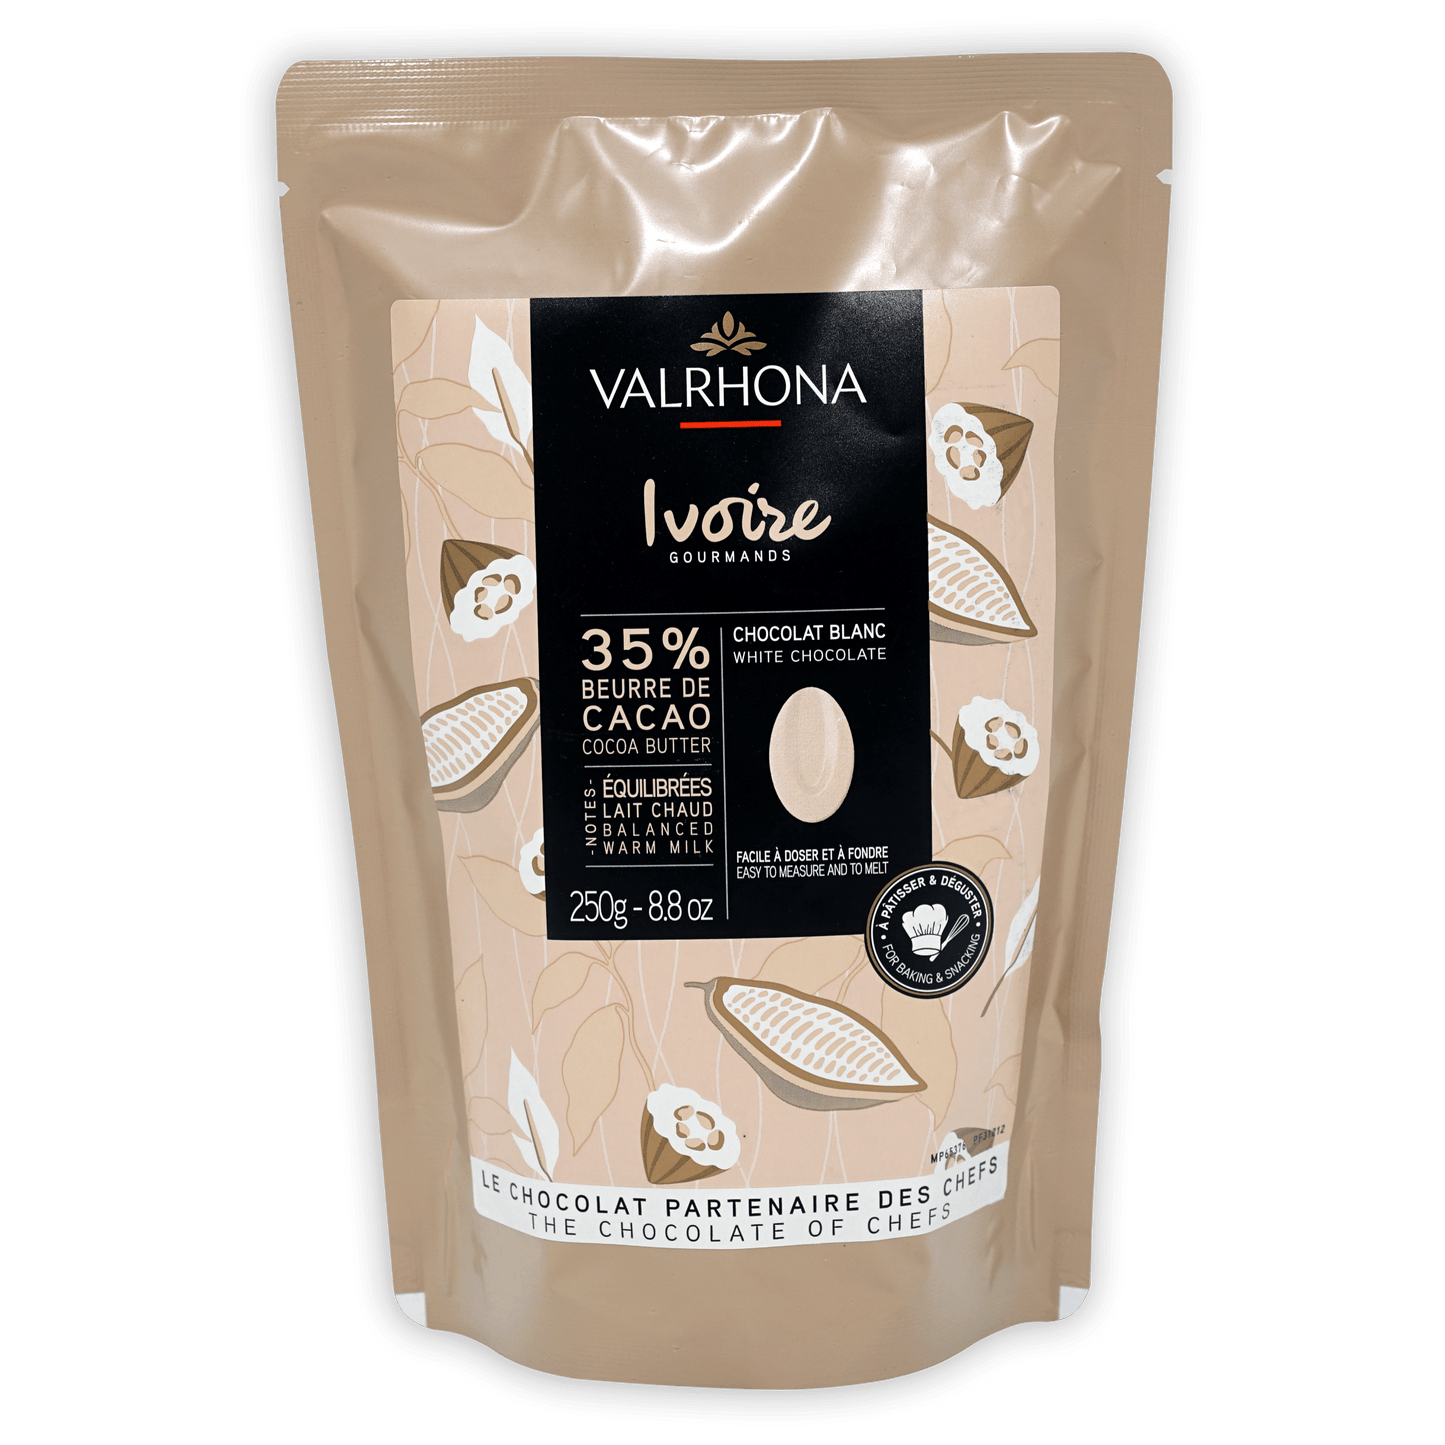 Valrhona Ivoire 35% White Chocolate Feve 6.6 lb.